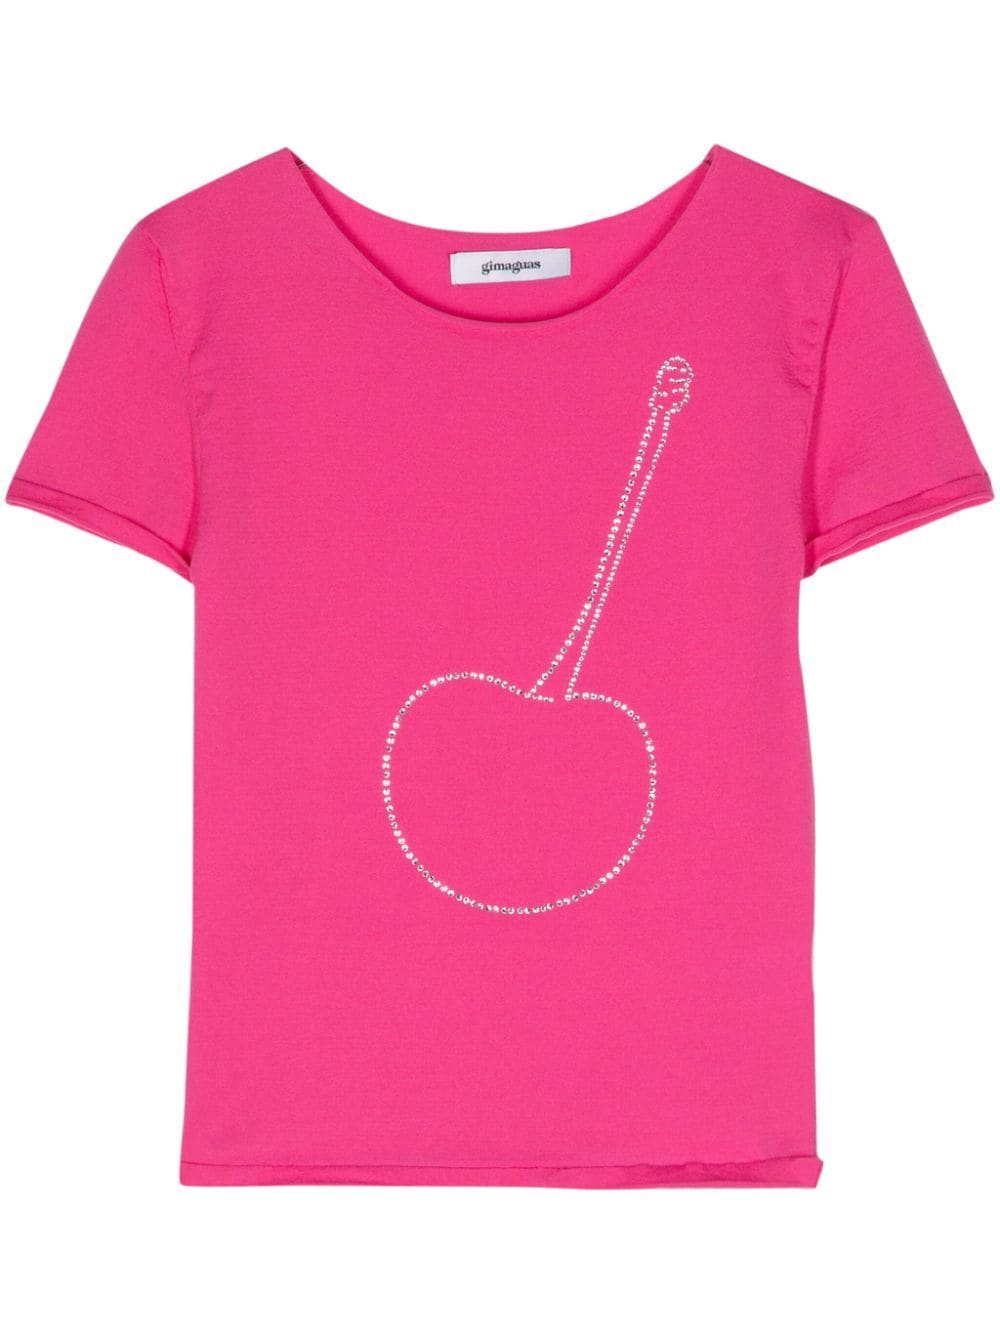 Gimaguas Cherry Rhinestone-embellished T-shirt In Pink